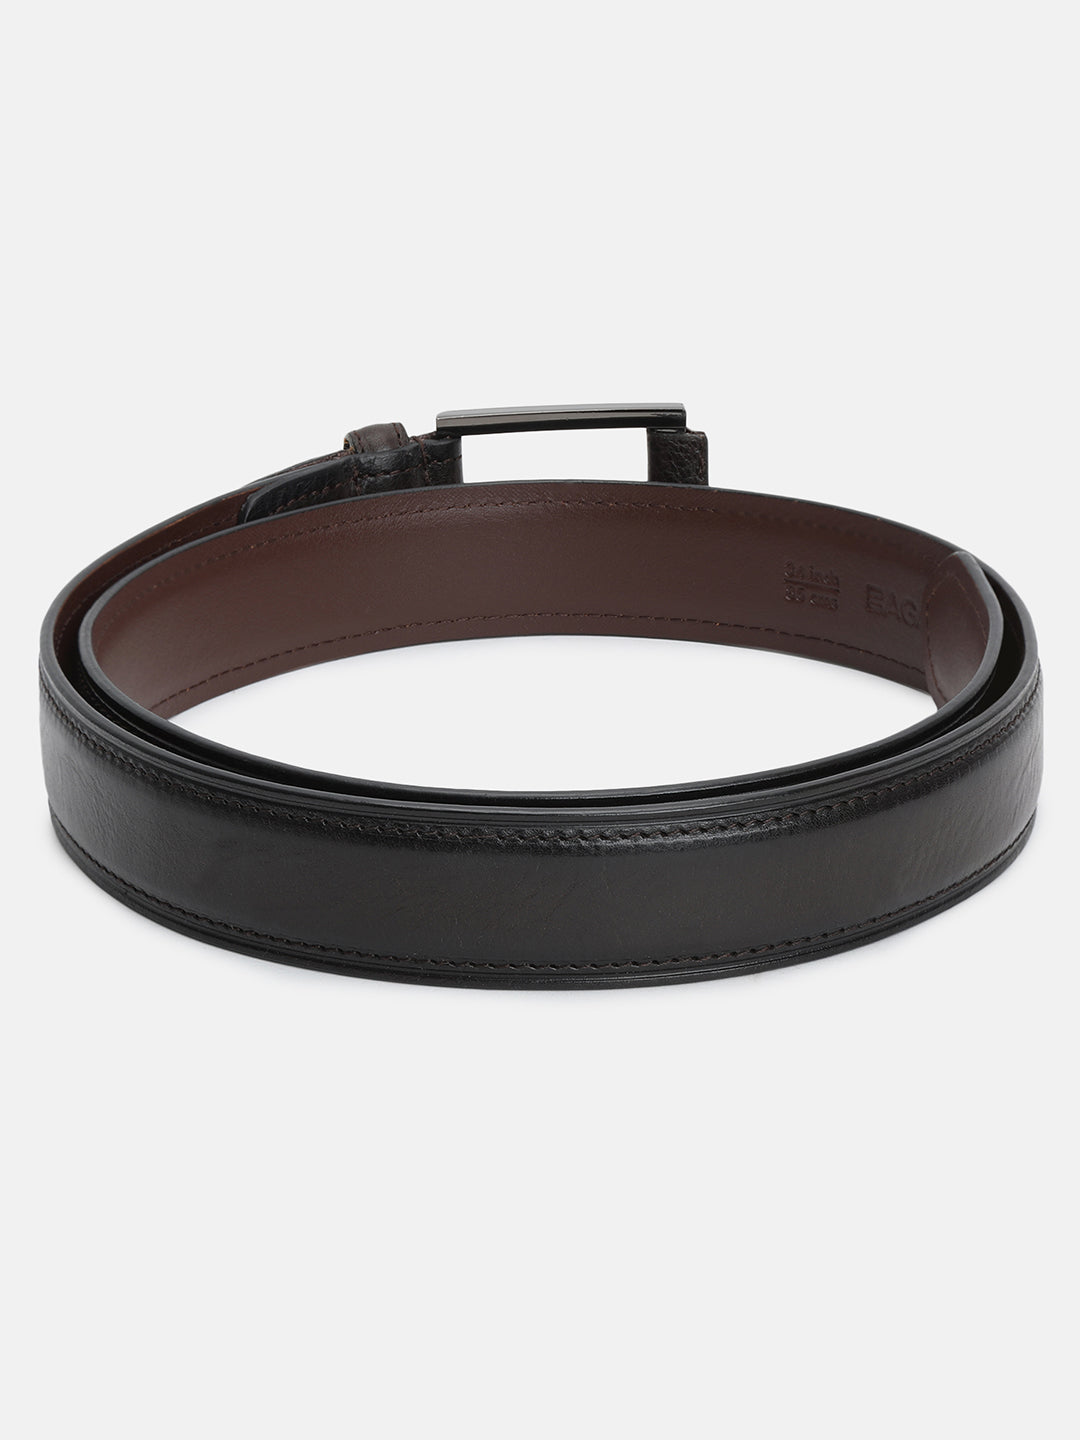 BAGATT Dark Brown Non-Reversible Leather Belt